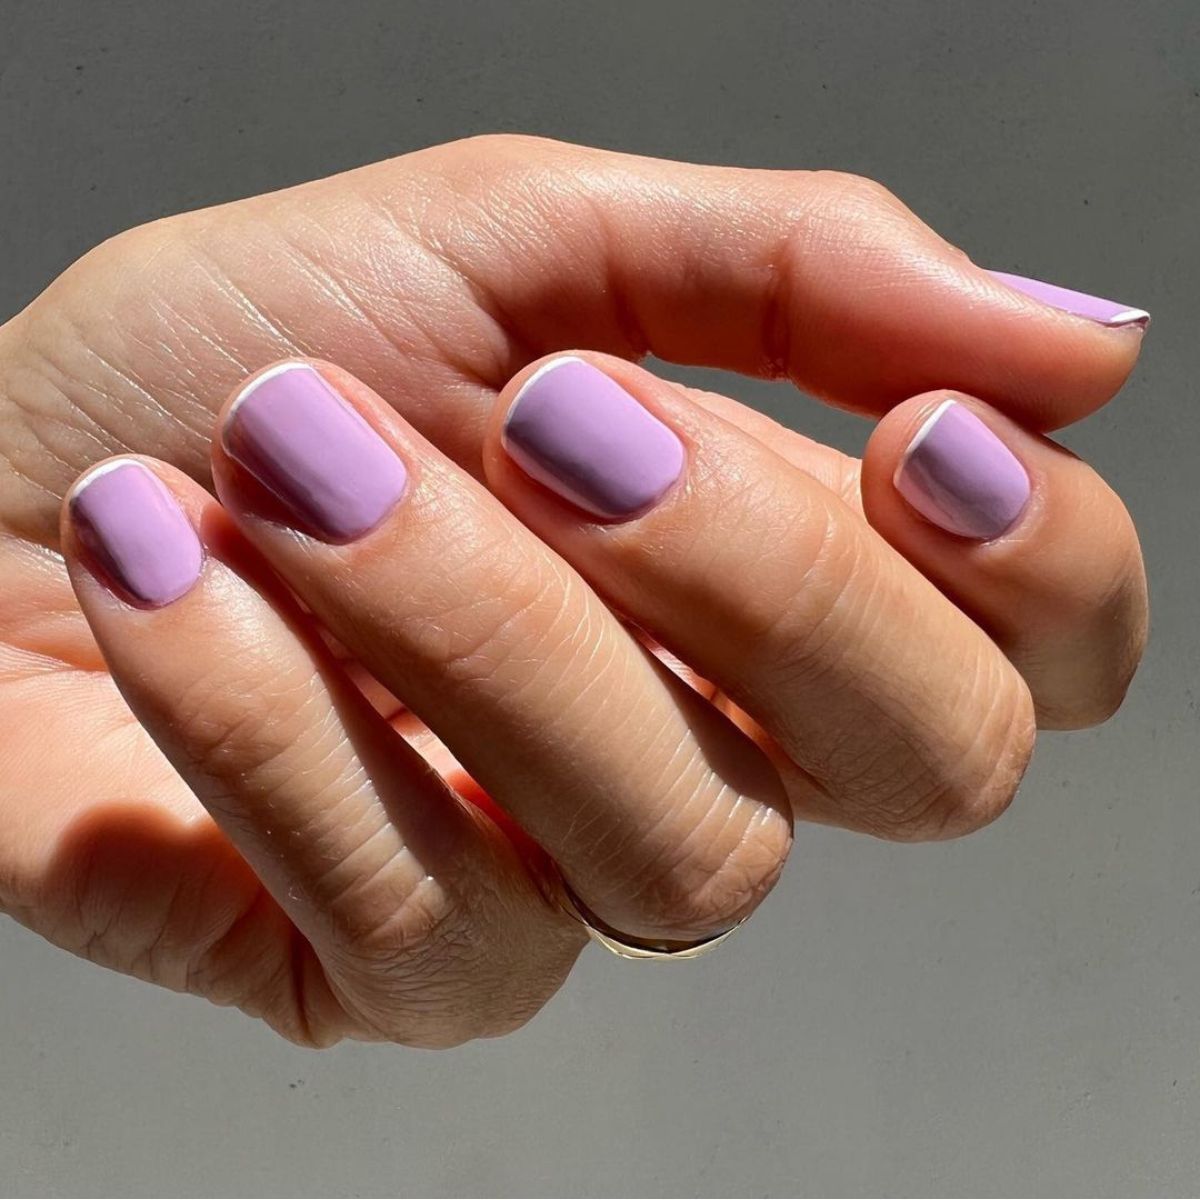 33 Trendy Lavender Nails and Polish Design Ideas 2023